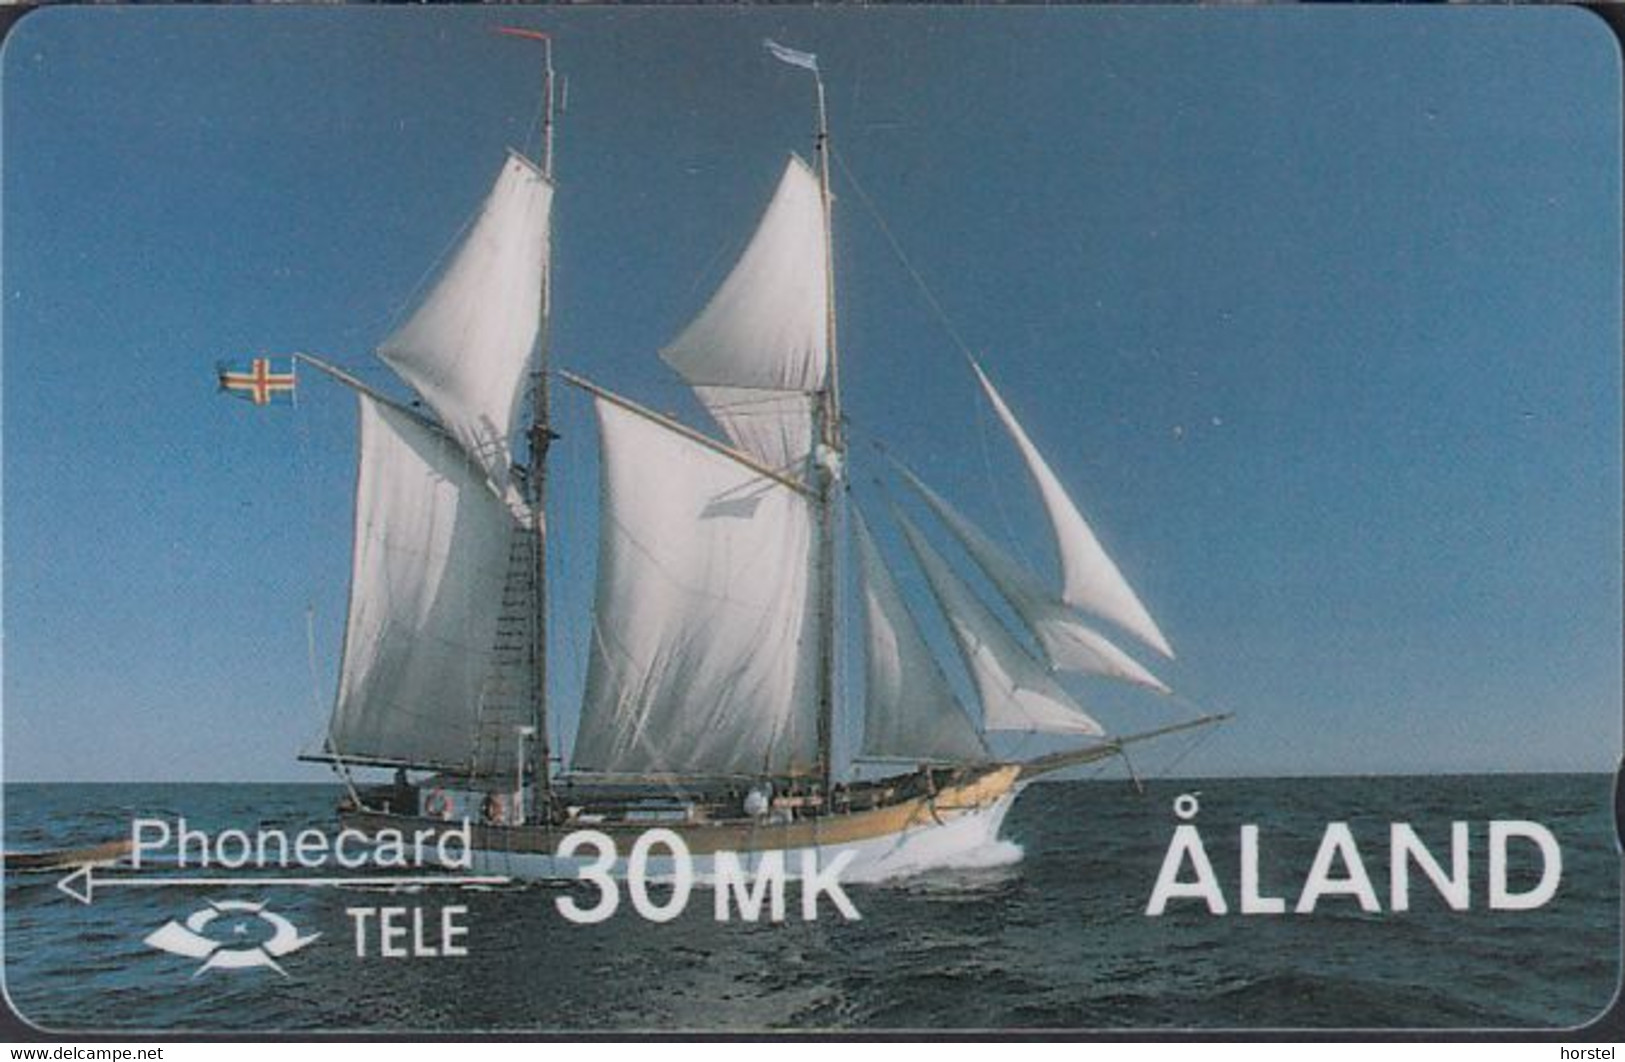 Aland GPT  - The Galley Albanus - Sailingship - 30 MK - 2FINC - Mint - Aland